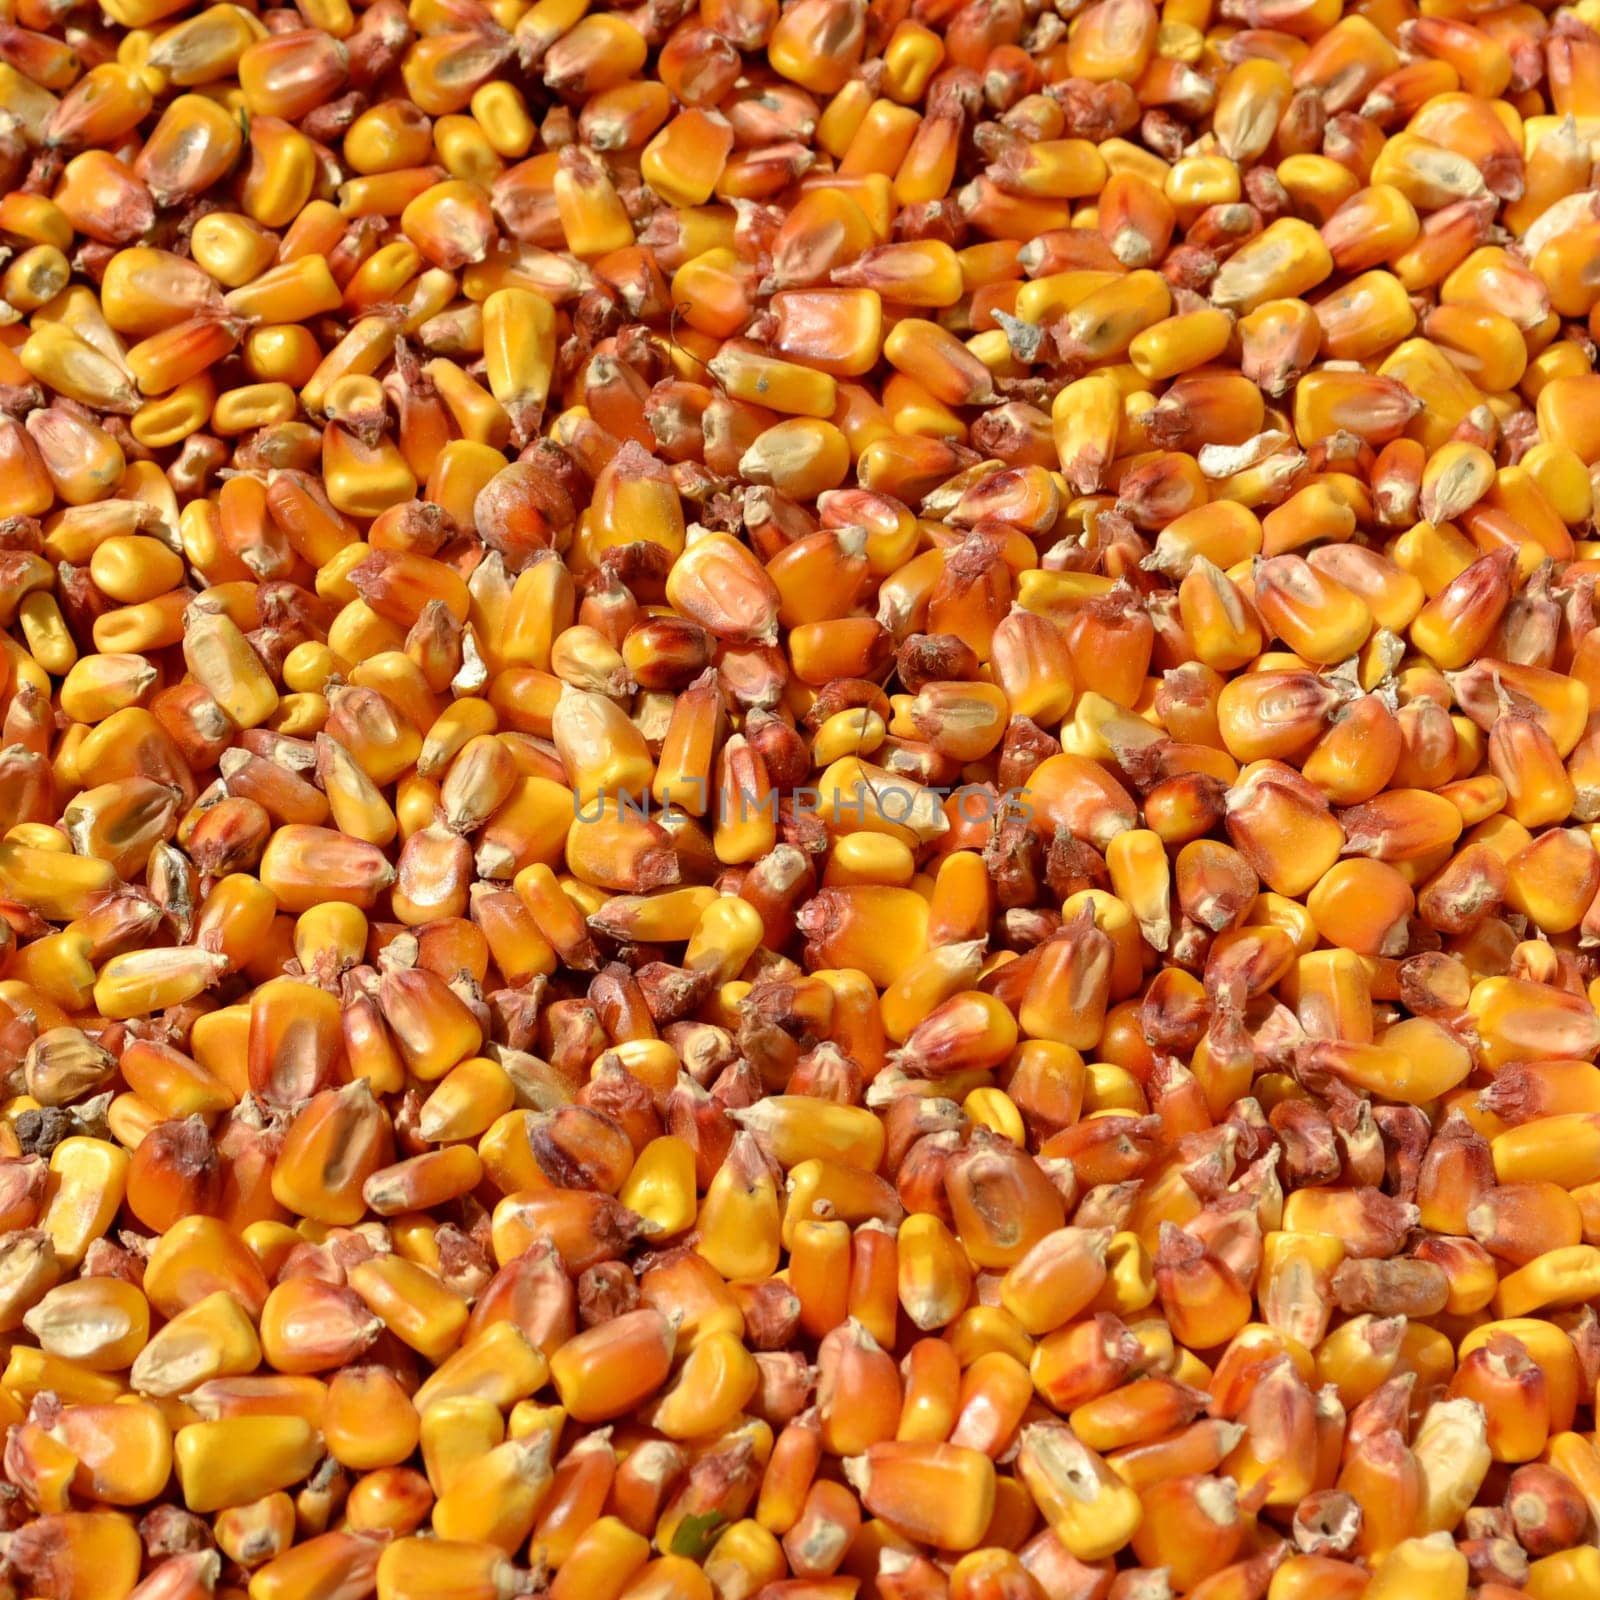 Corn grains background by hibrida13